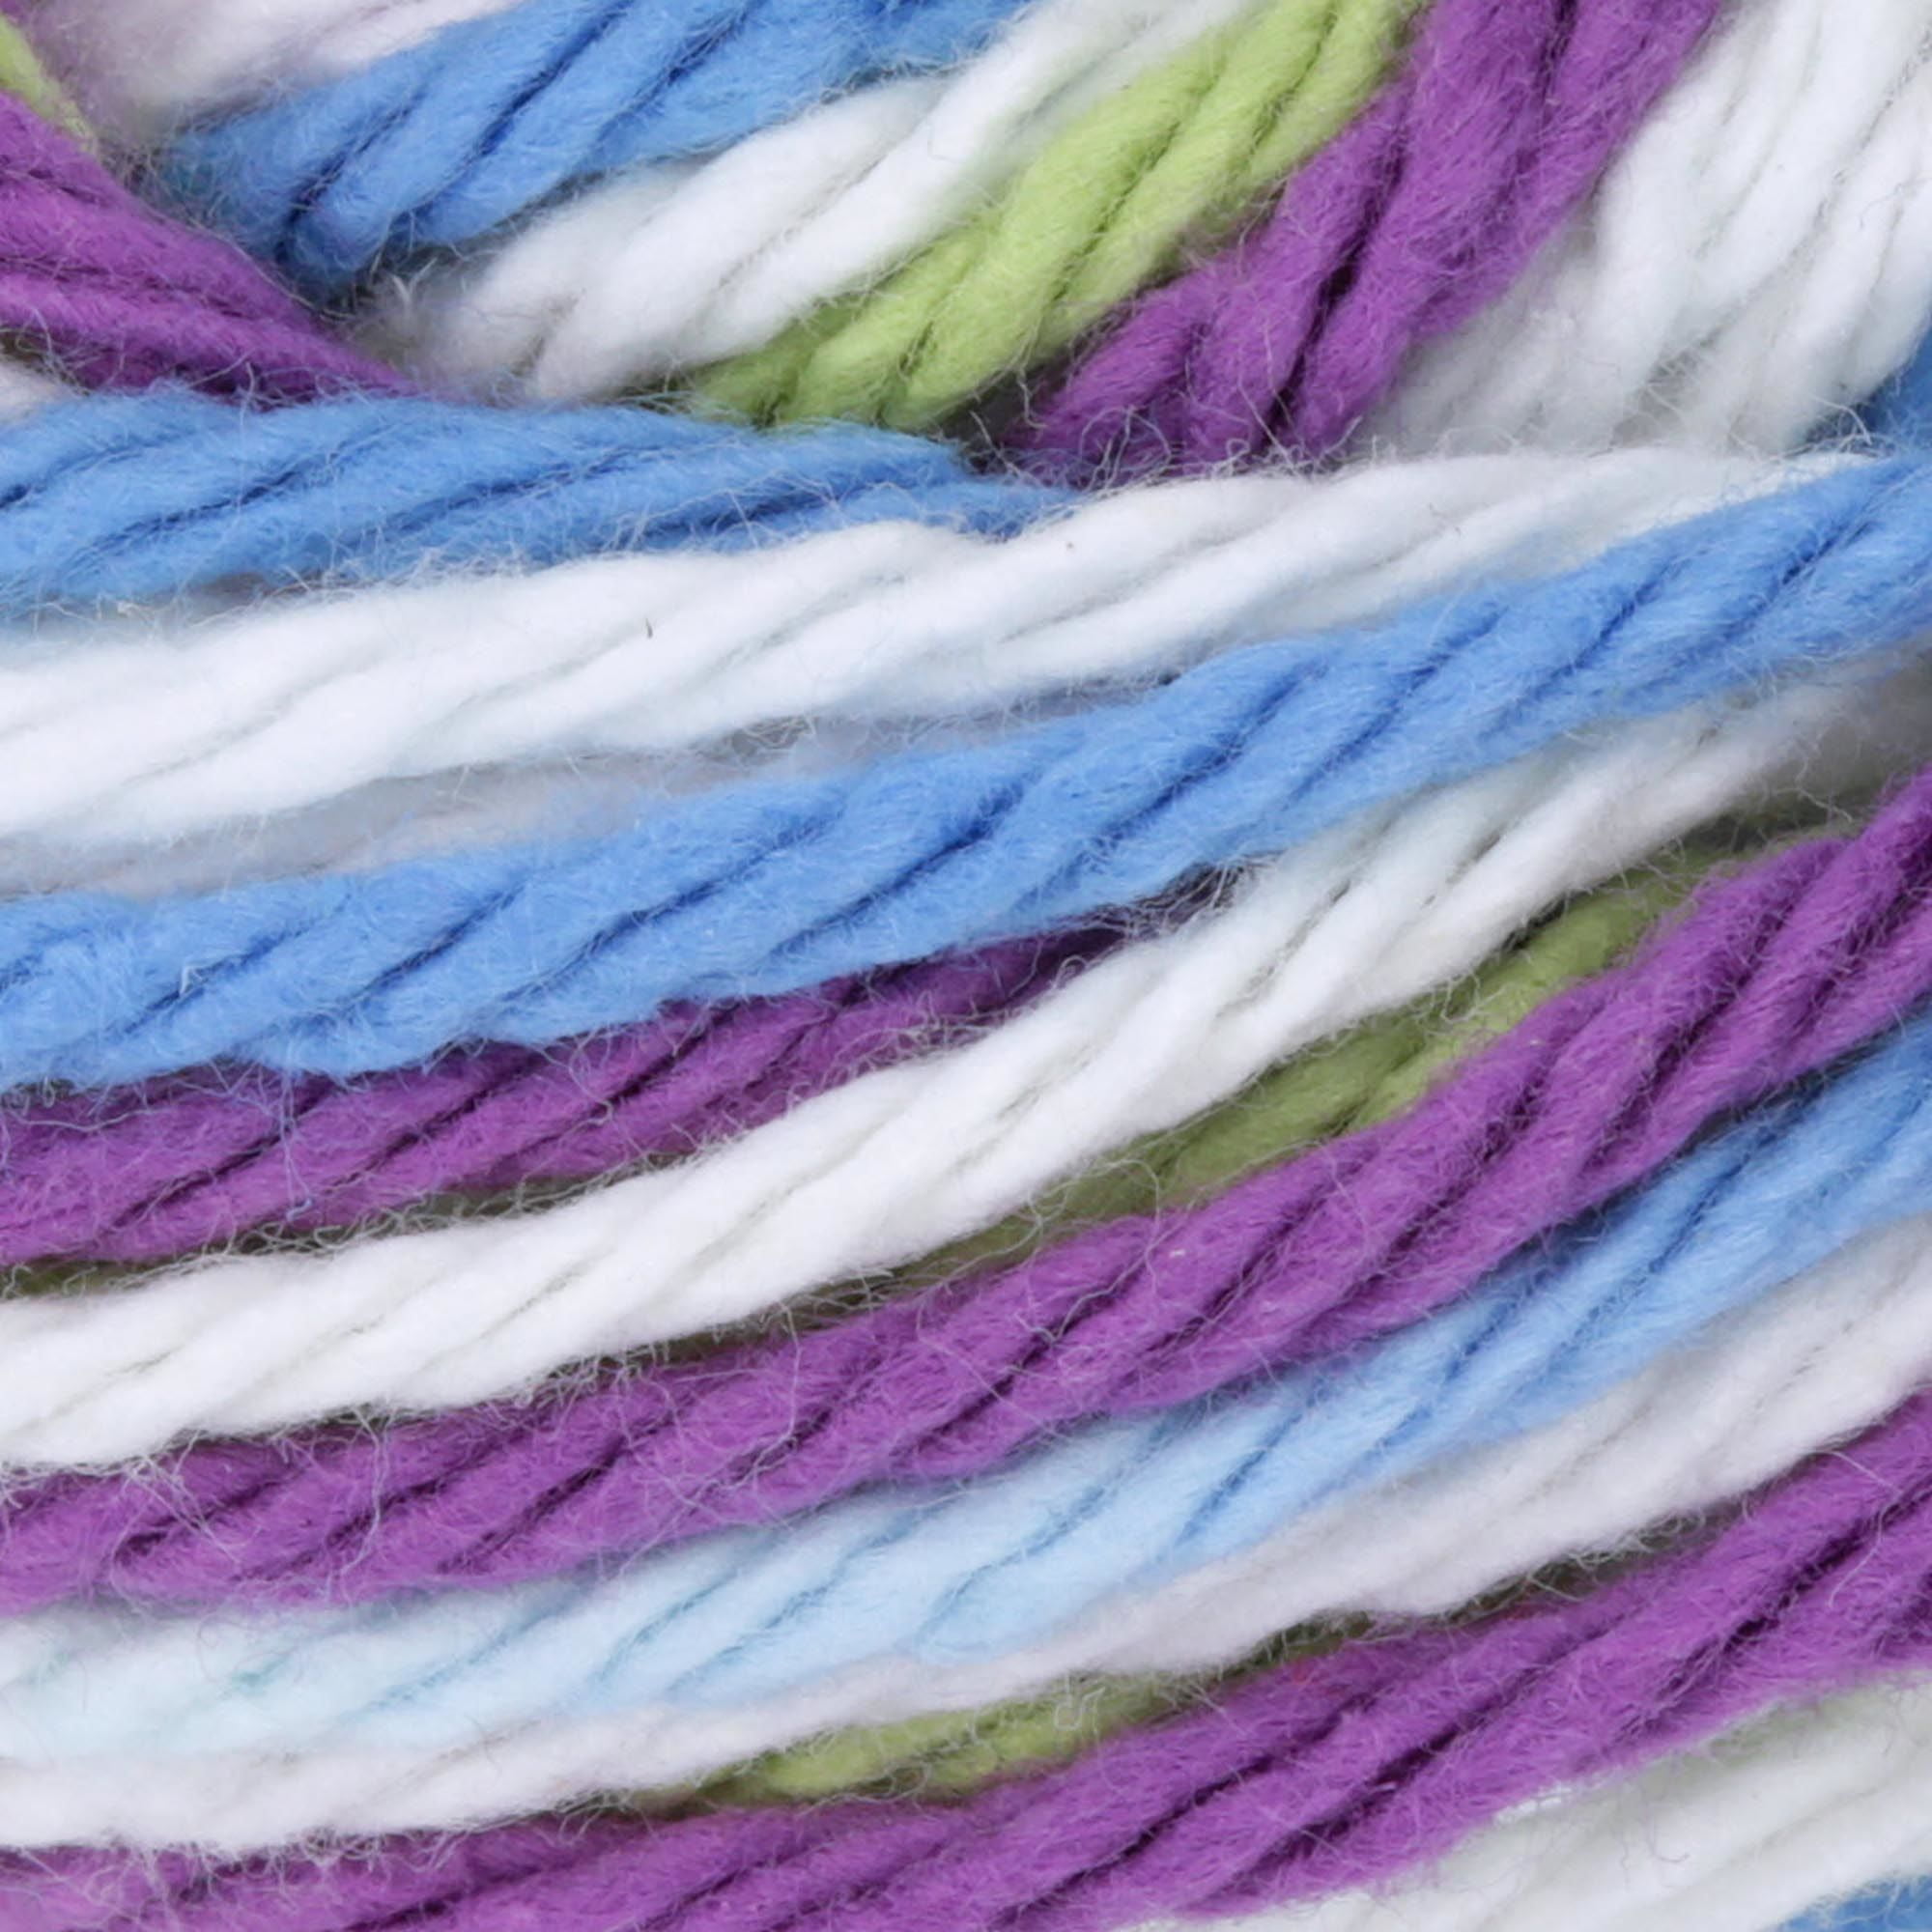 Lily Sugar 'n Cream Yarn - 100% Cotton - Assortment (Fruit Punch) – Craft  Bunch